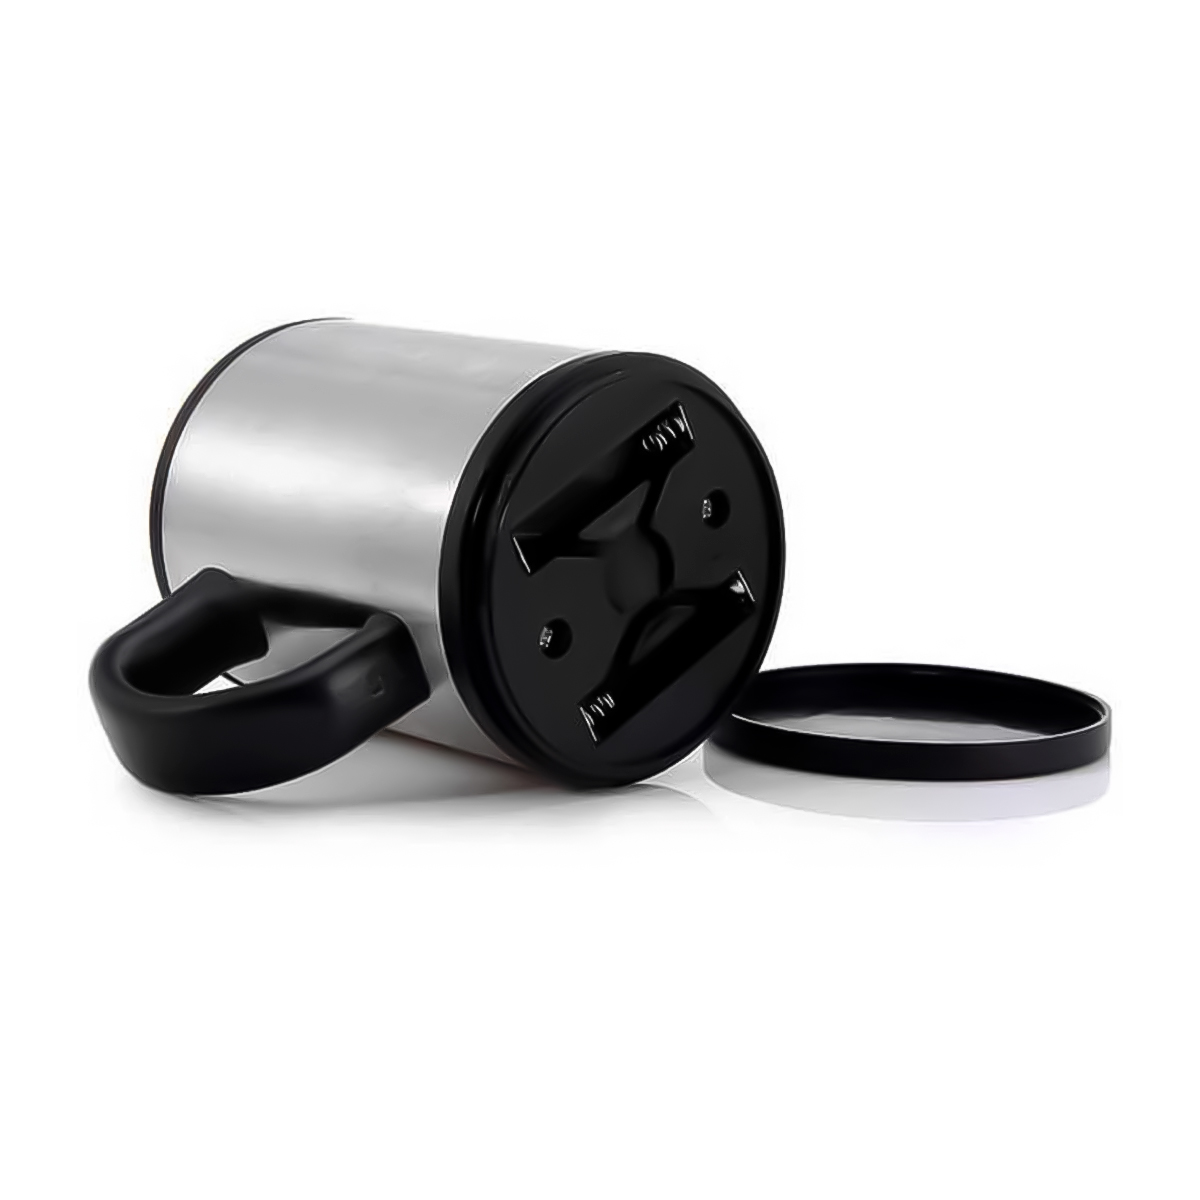 Taza batidora de acero inoxidable de 400 ml con tapa para agitar  eléctricamente, color negro liso